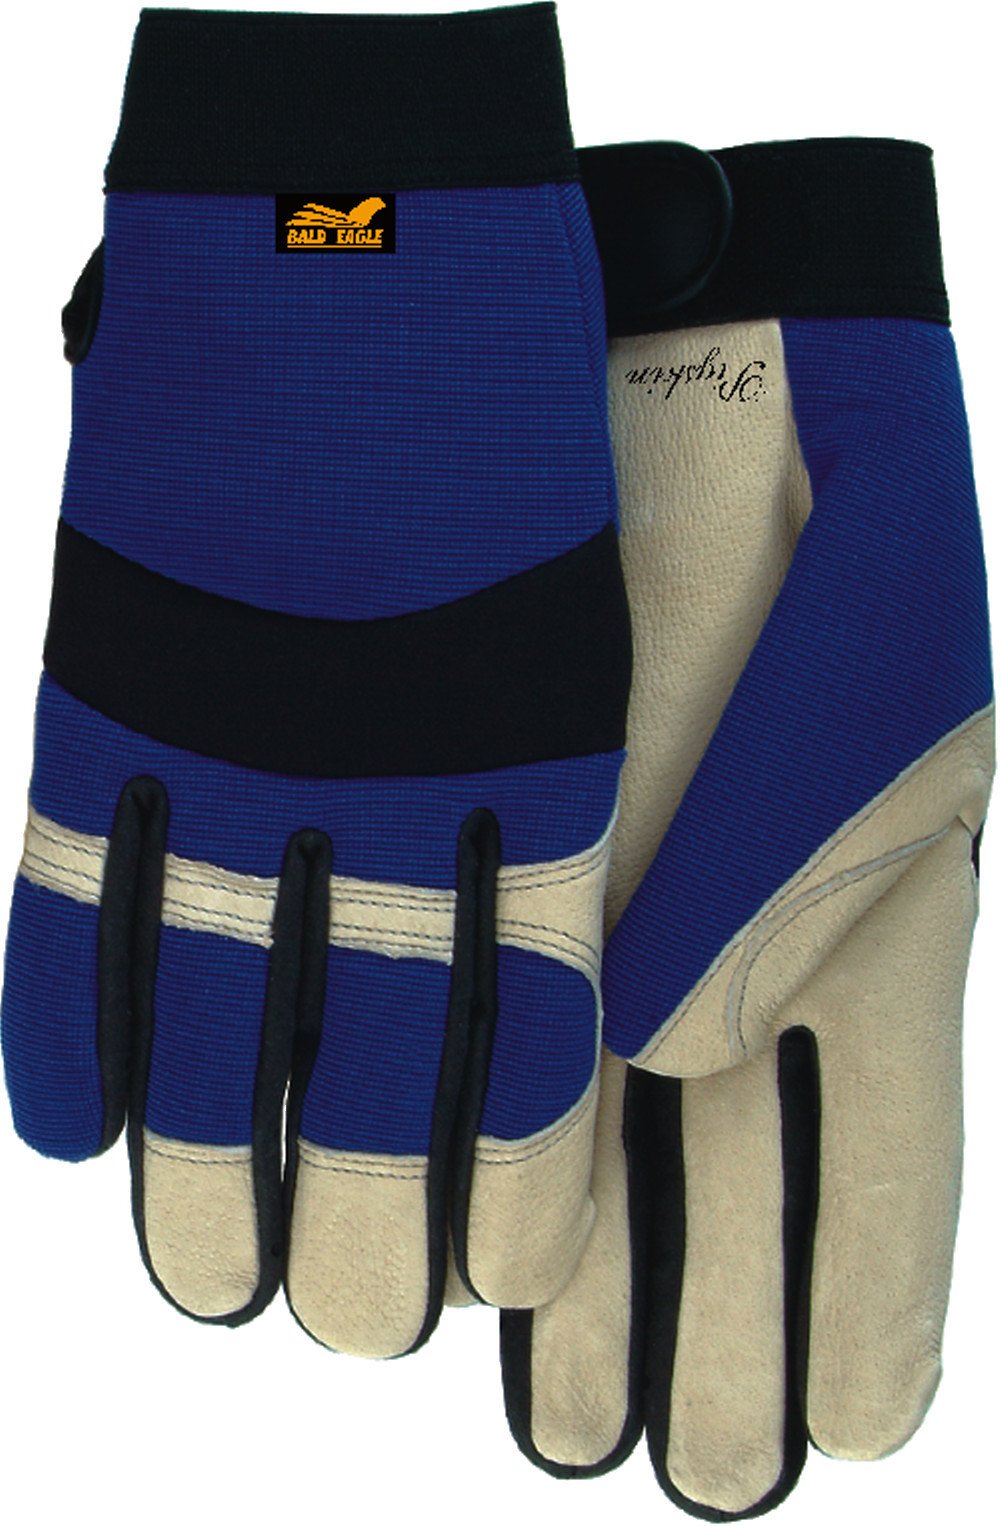 Majestic Insulated Waterproof Bald Eagle Mechanics Glove - Work World - Workwear, Work Boots, Safety Gear